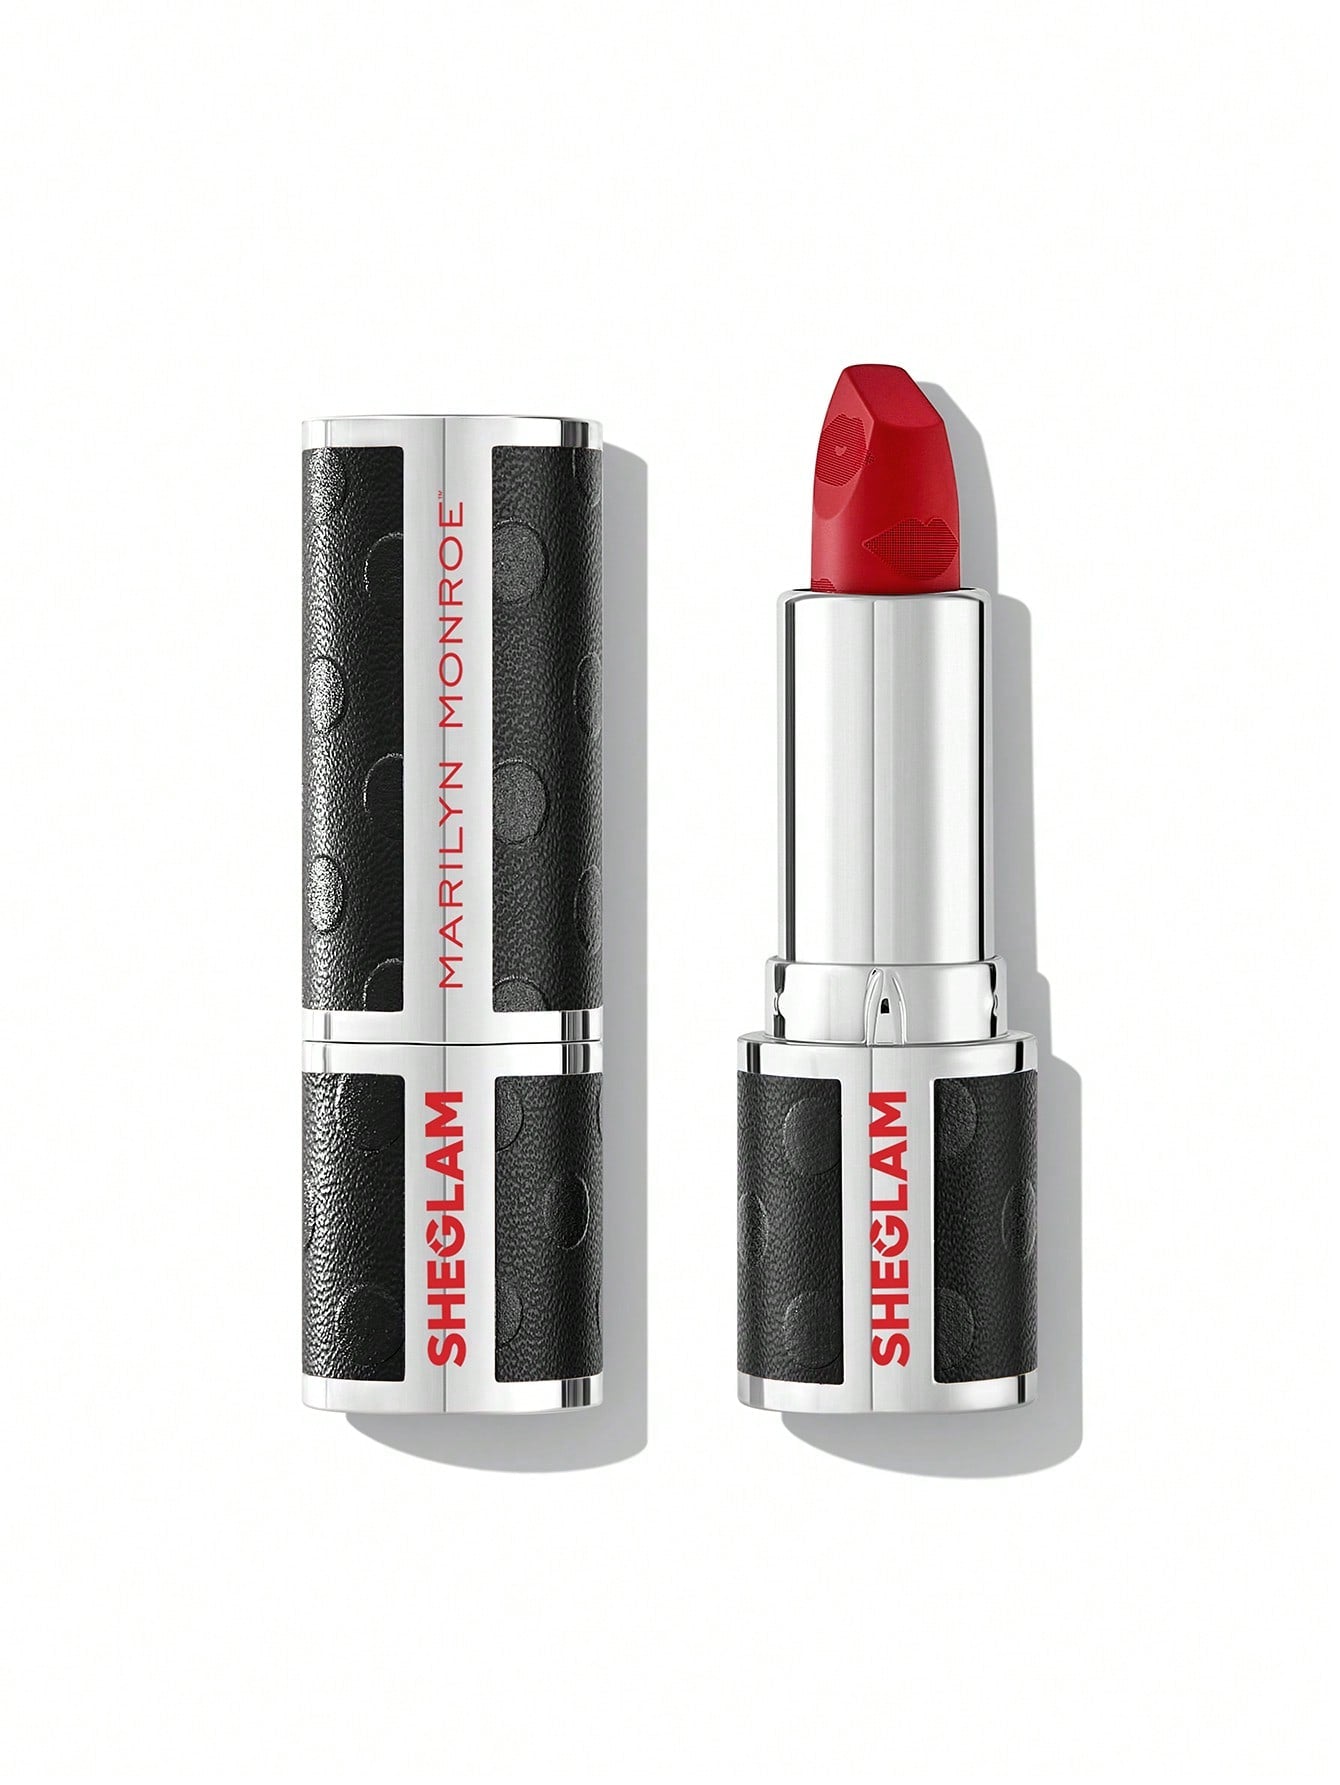 The Icon Lipstick-XOXO, Marilyn